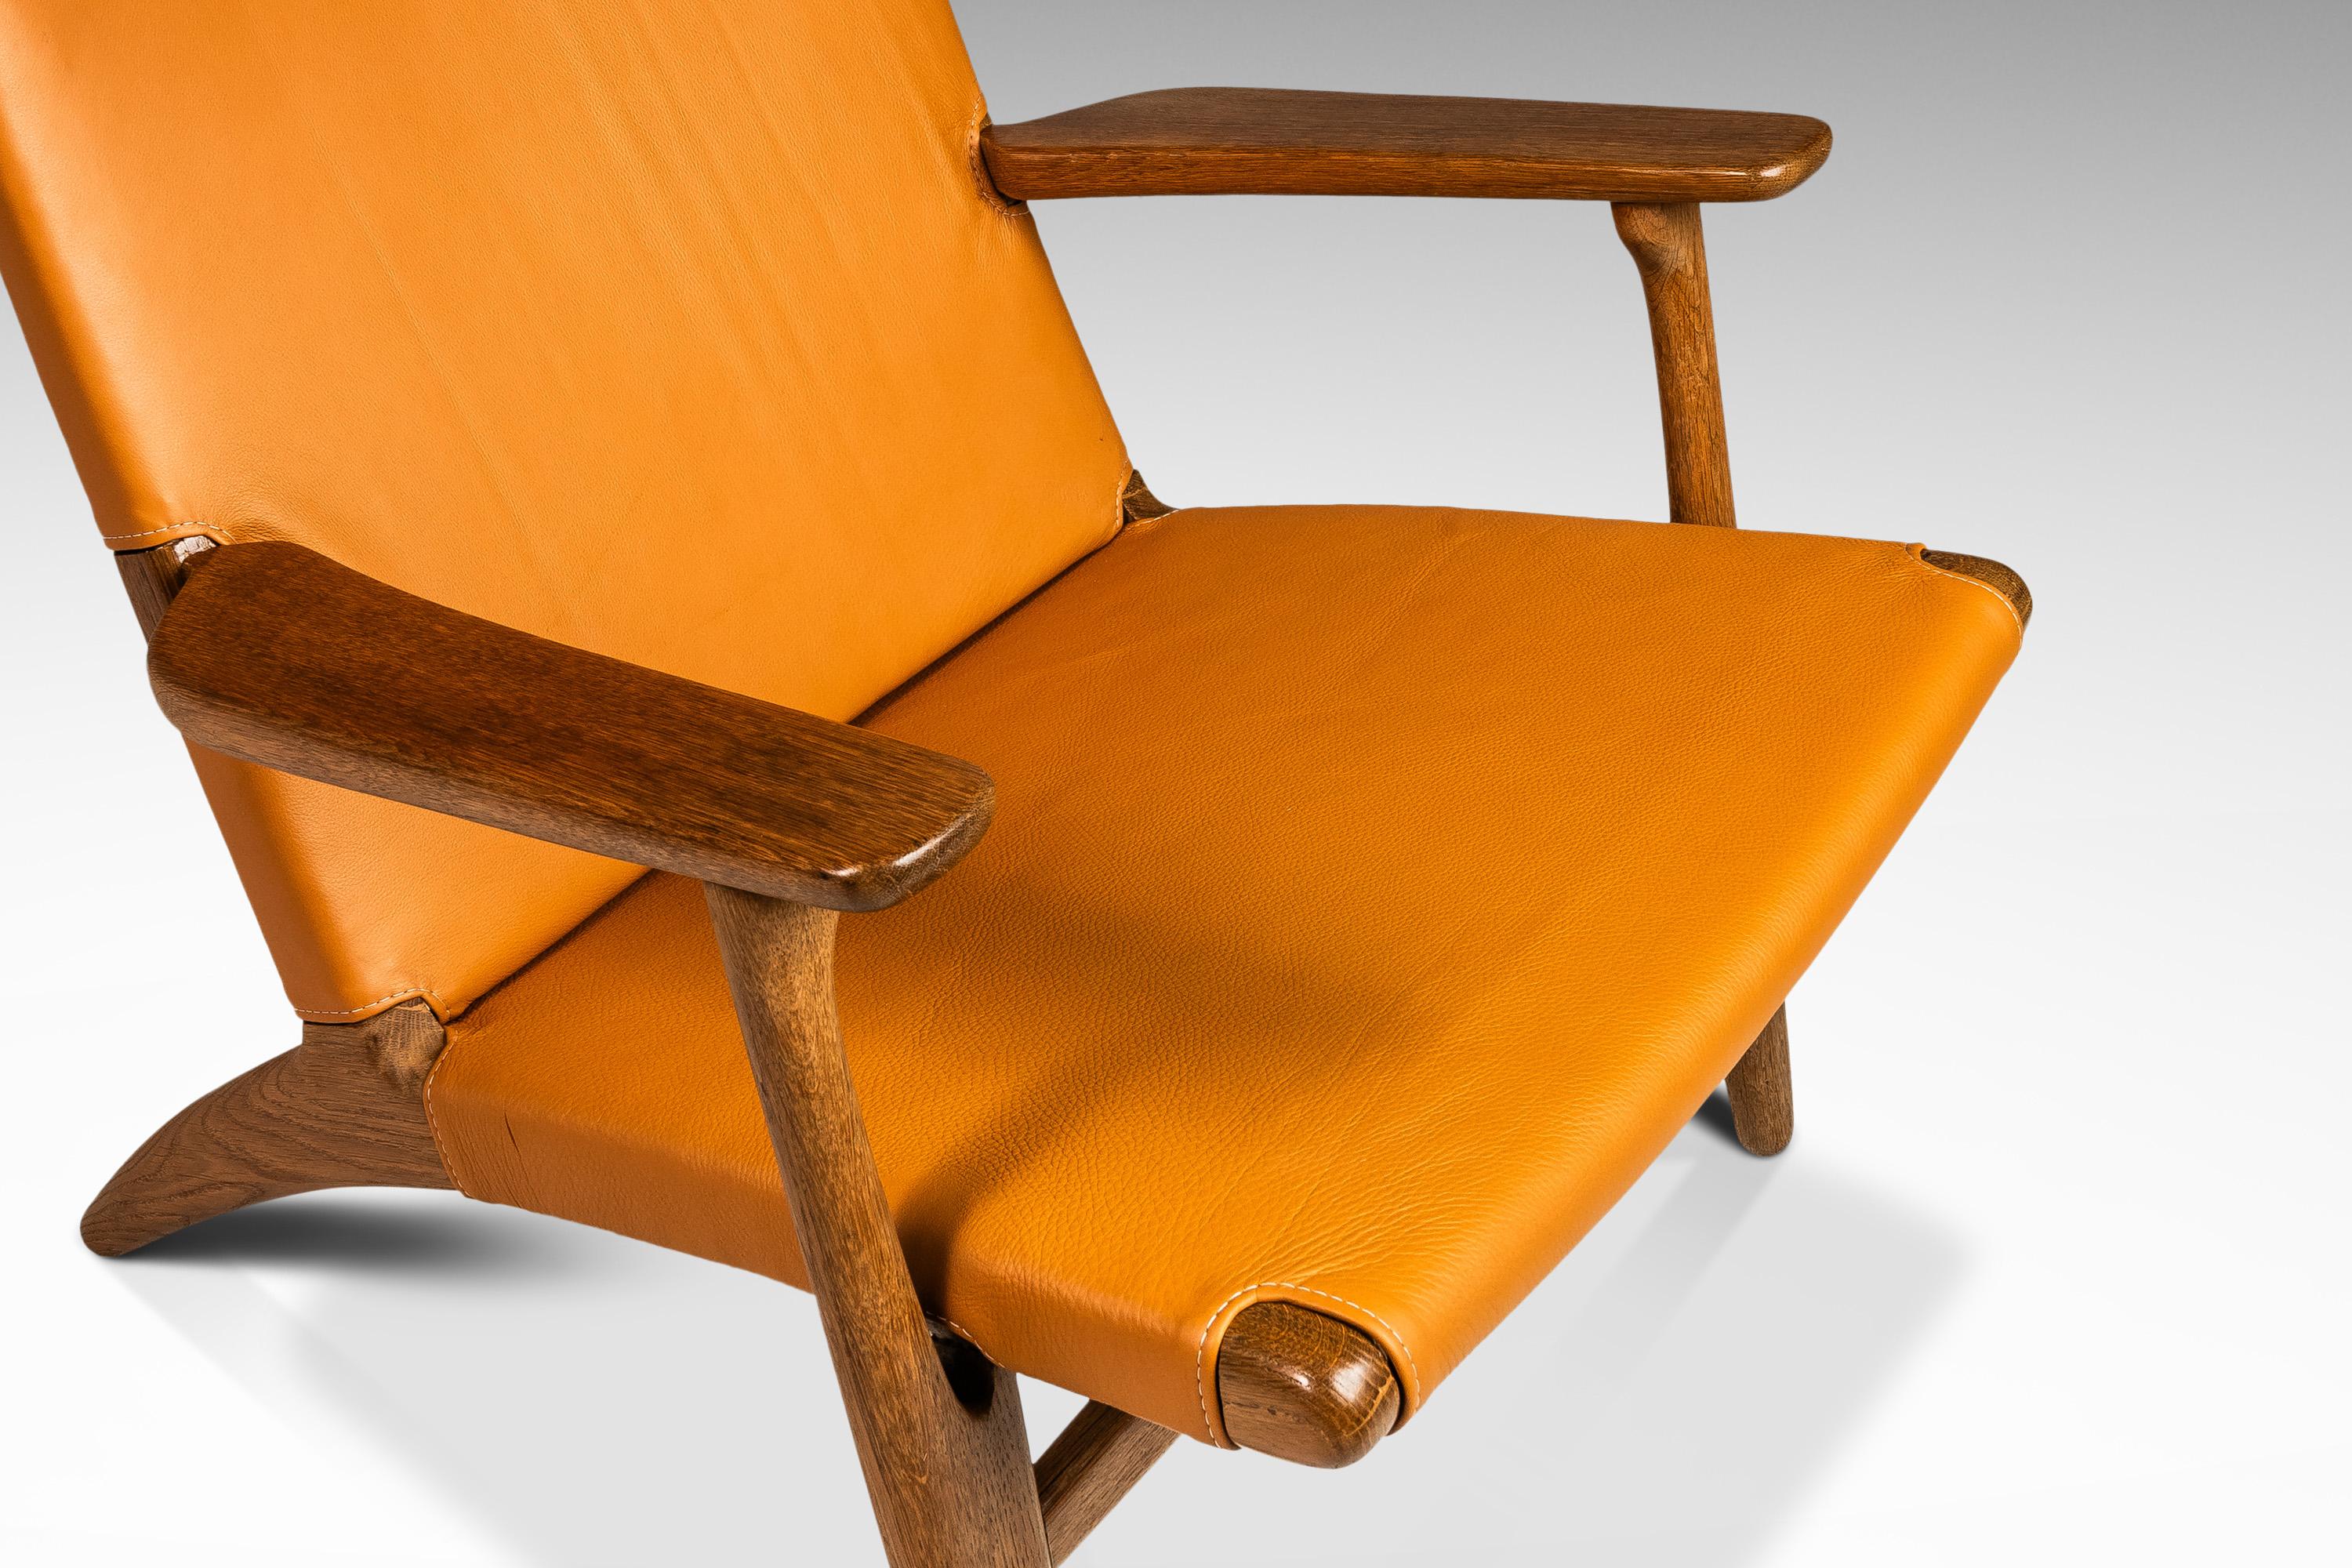  Danish Mid-Century CH 25 Lounge Chair by Hans J. Wegner, Oak & Leather, c. 1950 For Sale 12